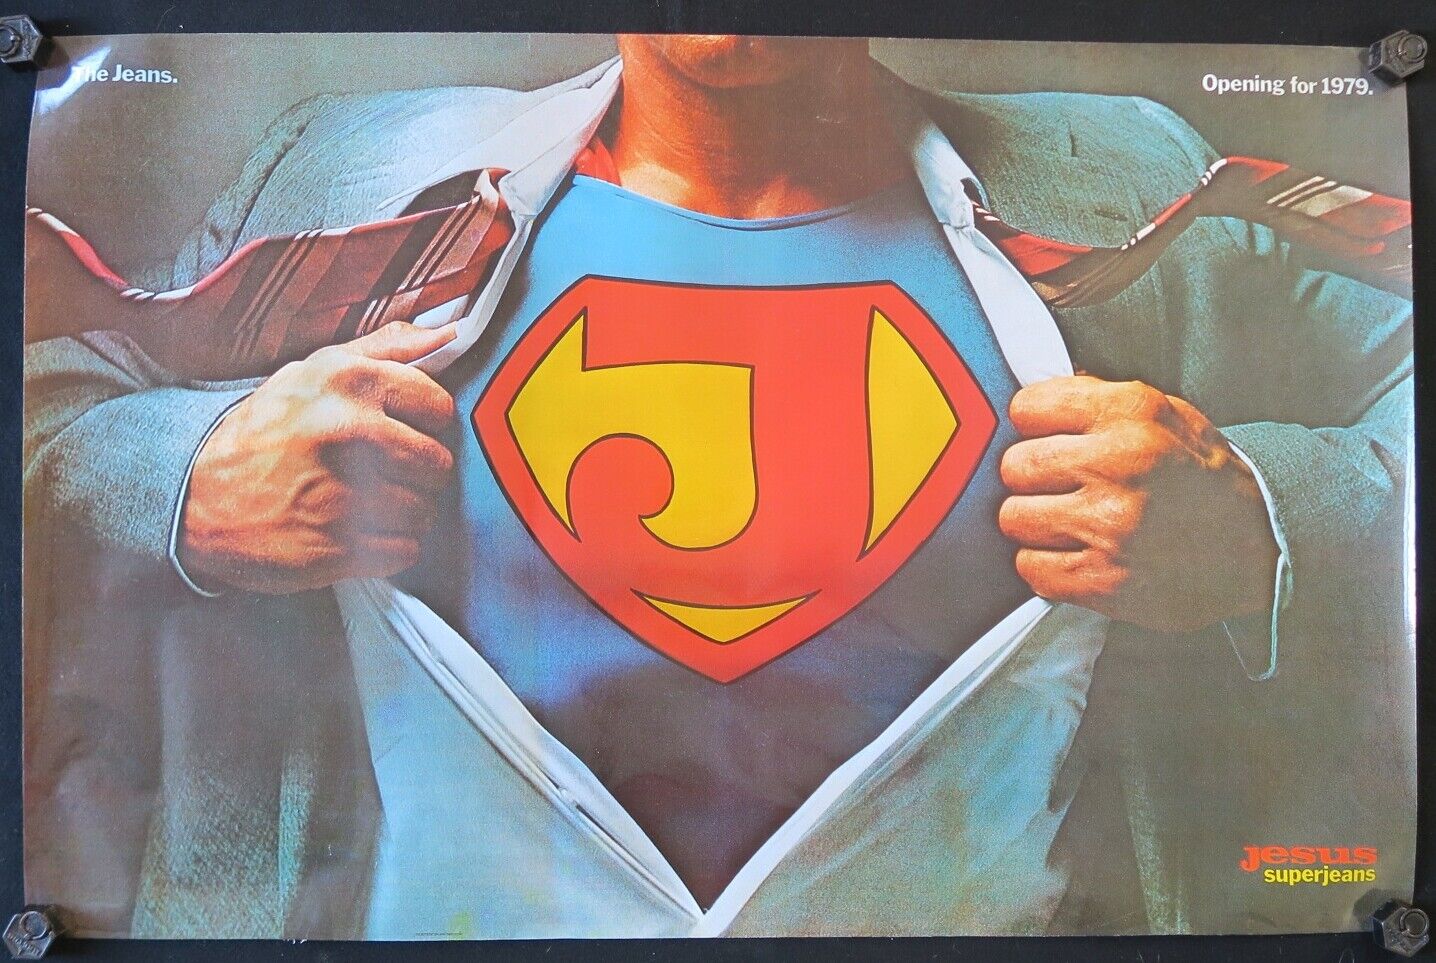 Original JESUS SUPER JEANS Opening for 1979 Superman Original Poster